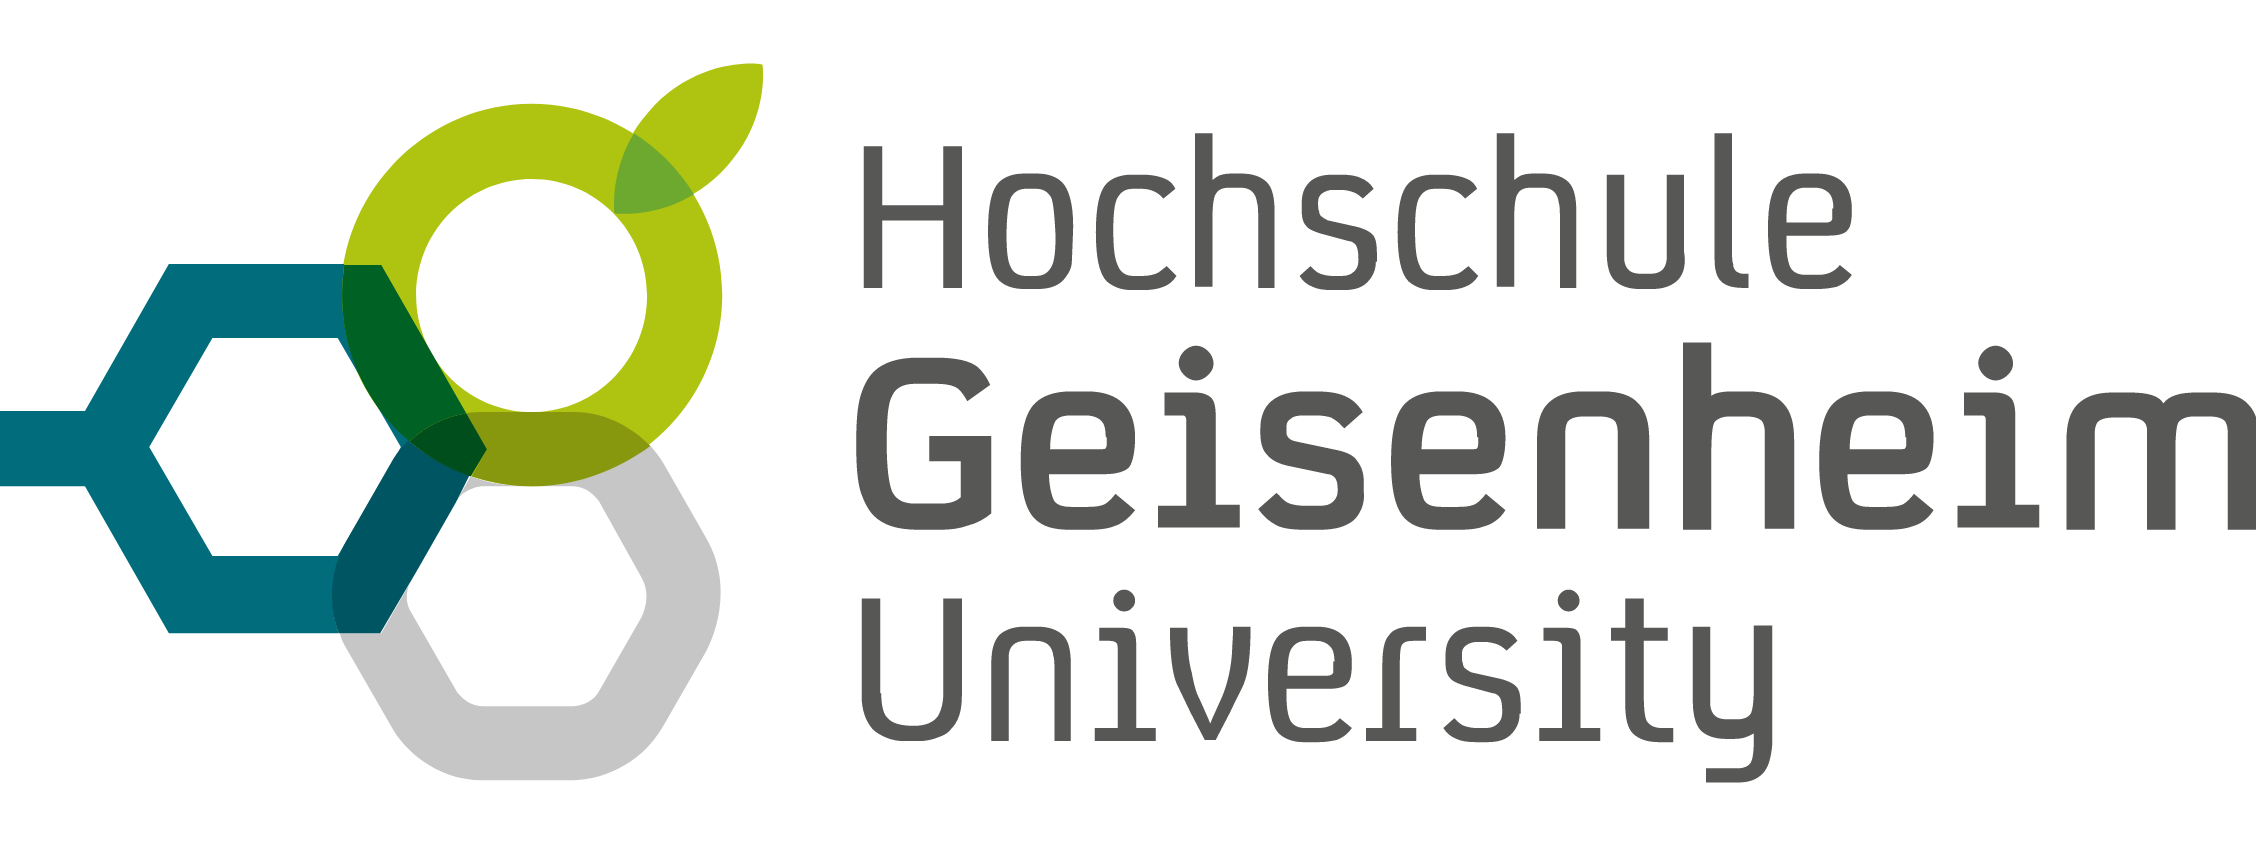 Hochschule Geisenheim University Logo